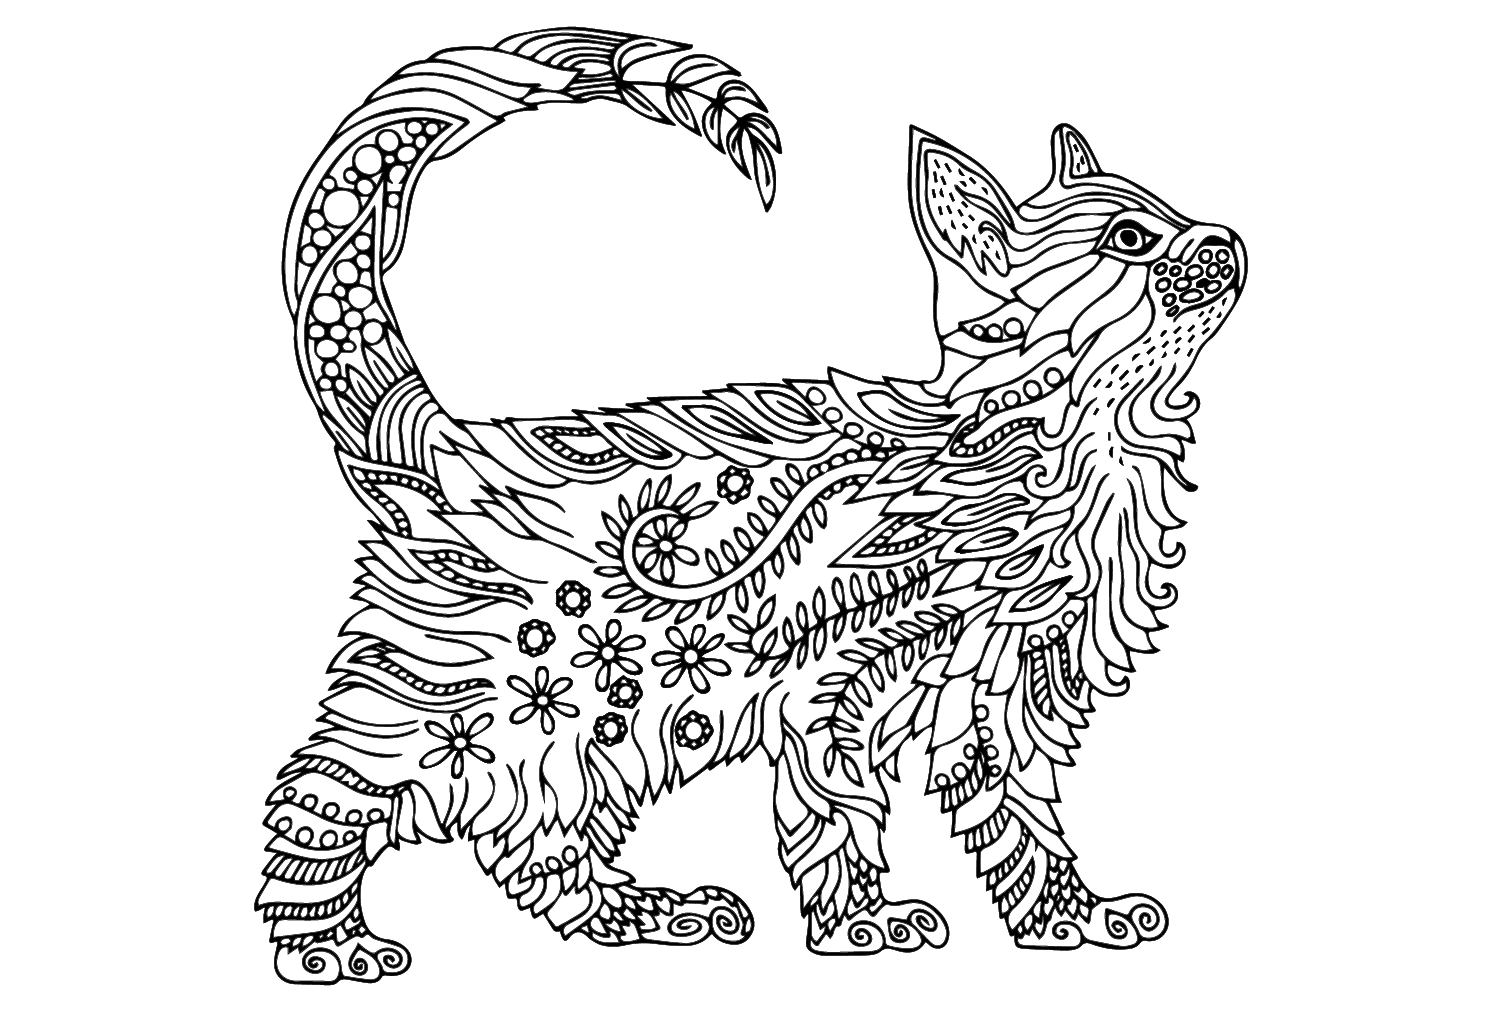 Zentangle Style Cat from Zentangle Animal